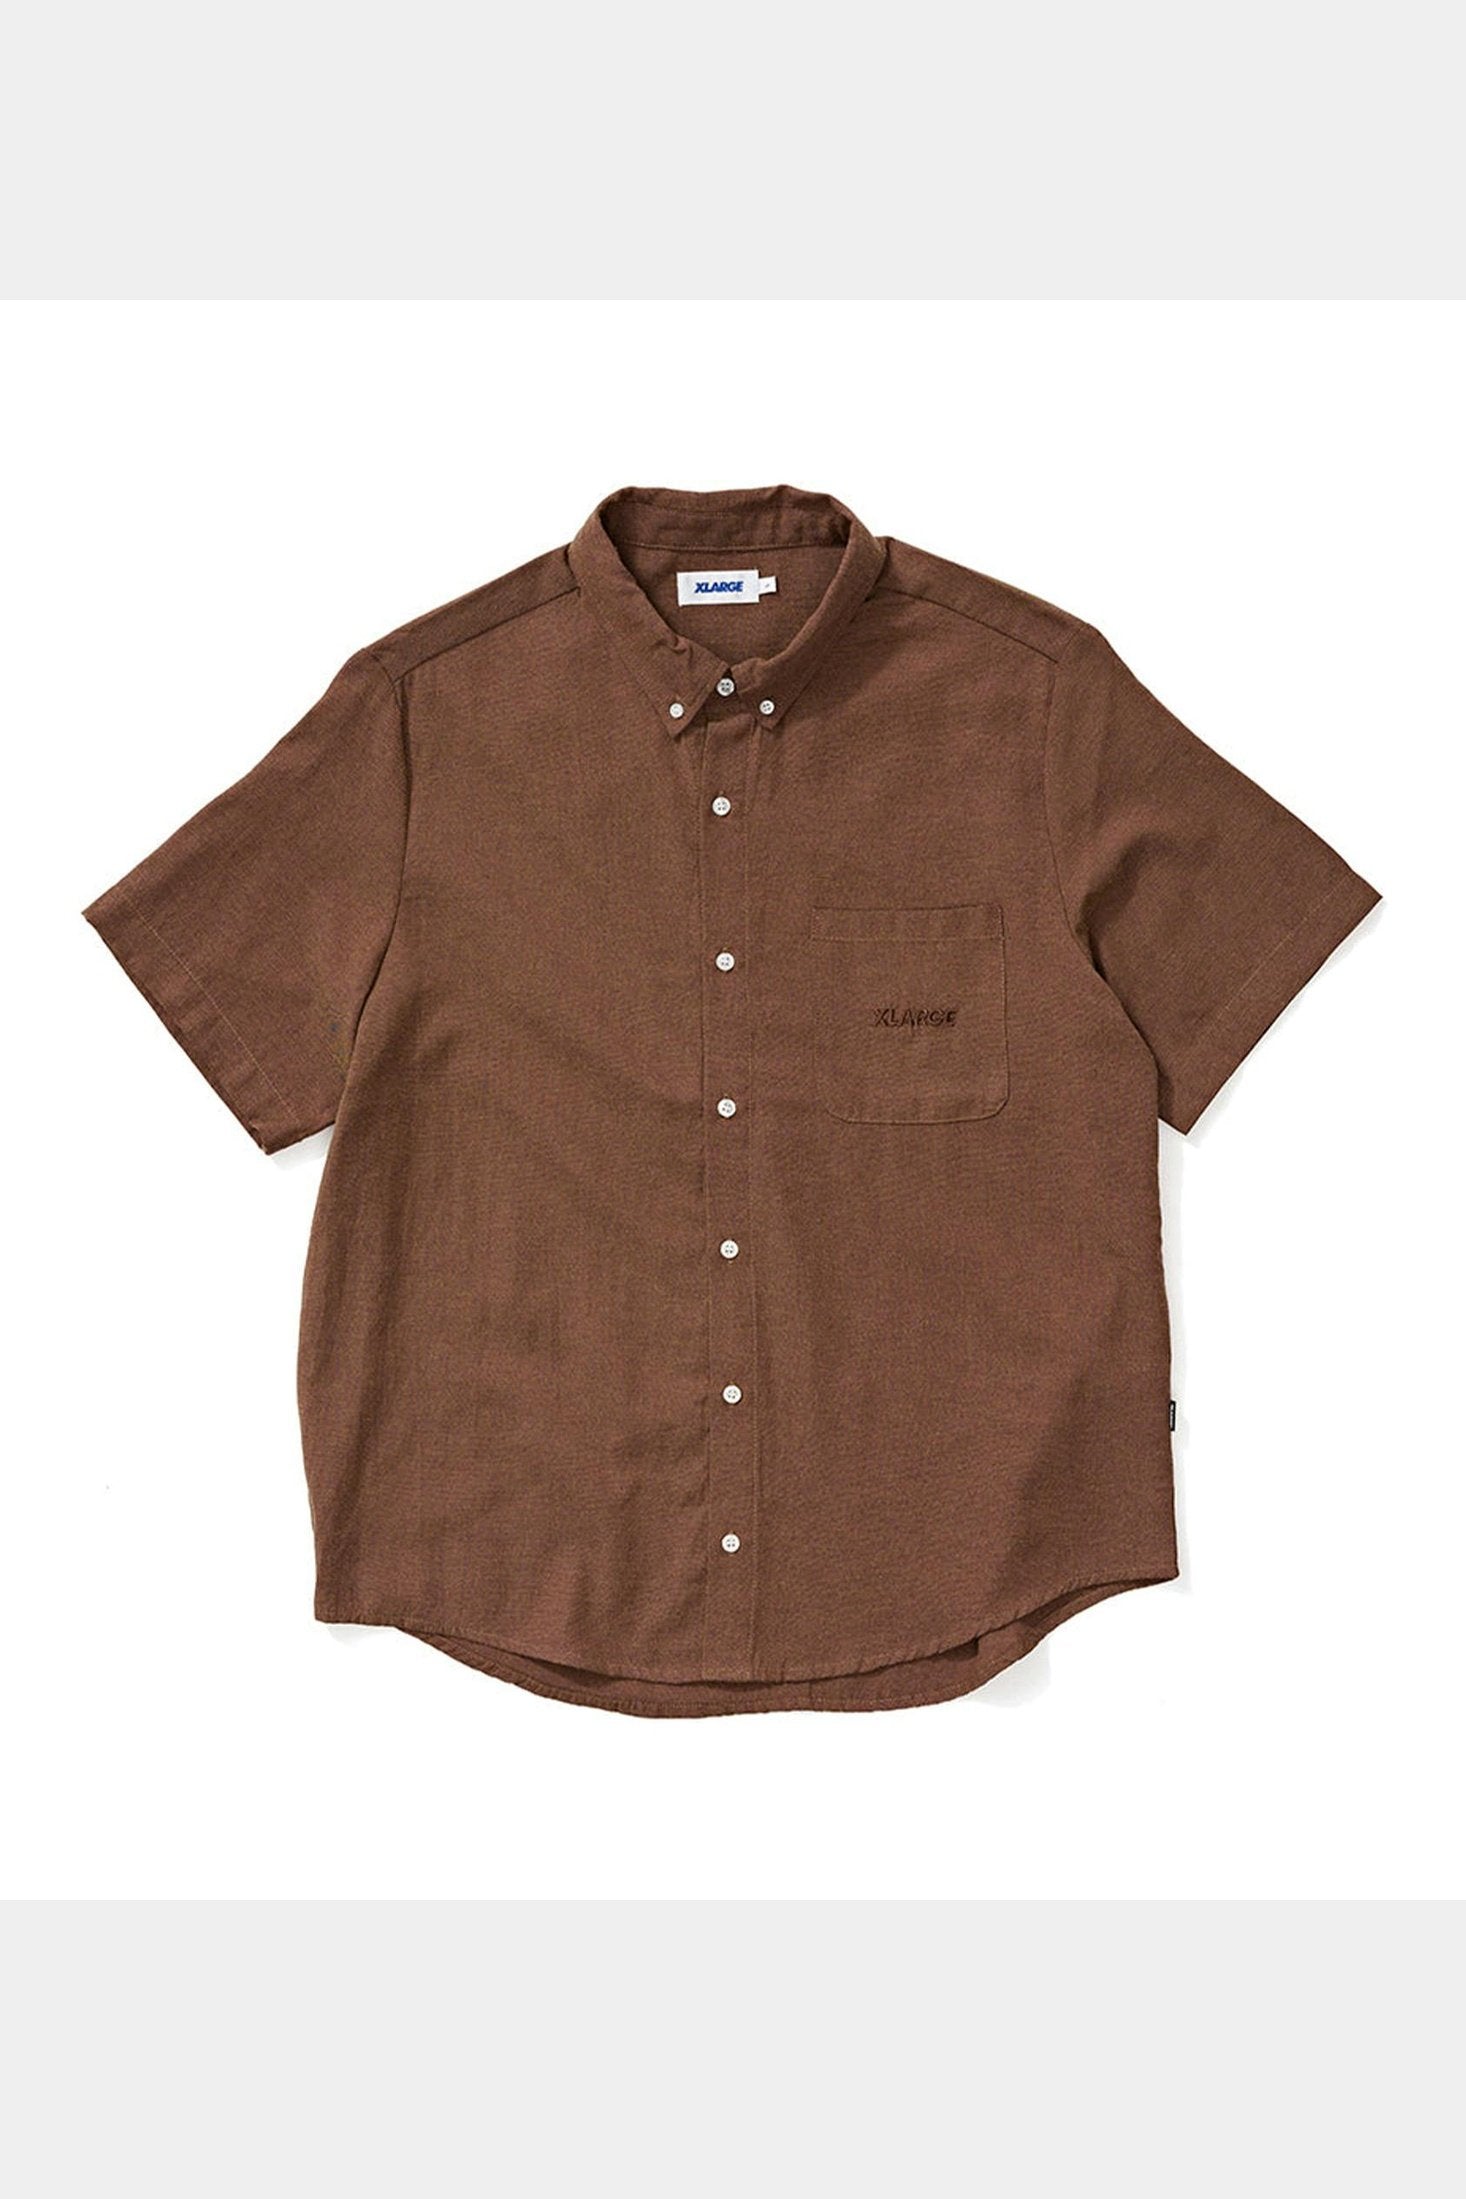 Xlarge 91 oxford shirt brown